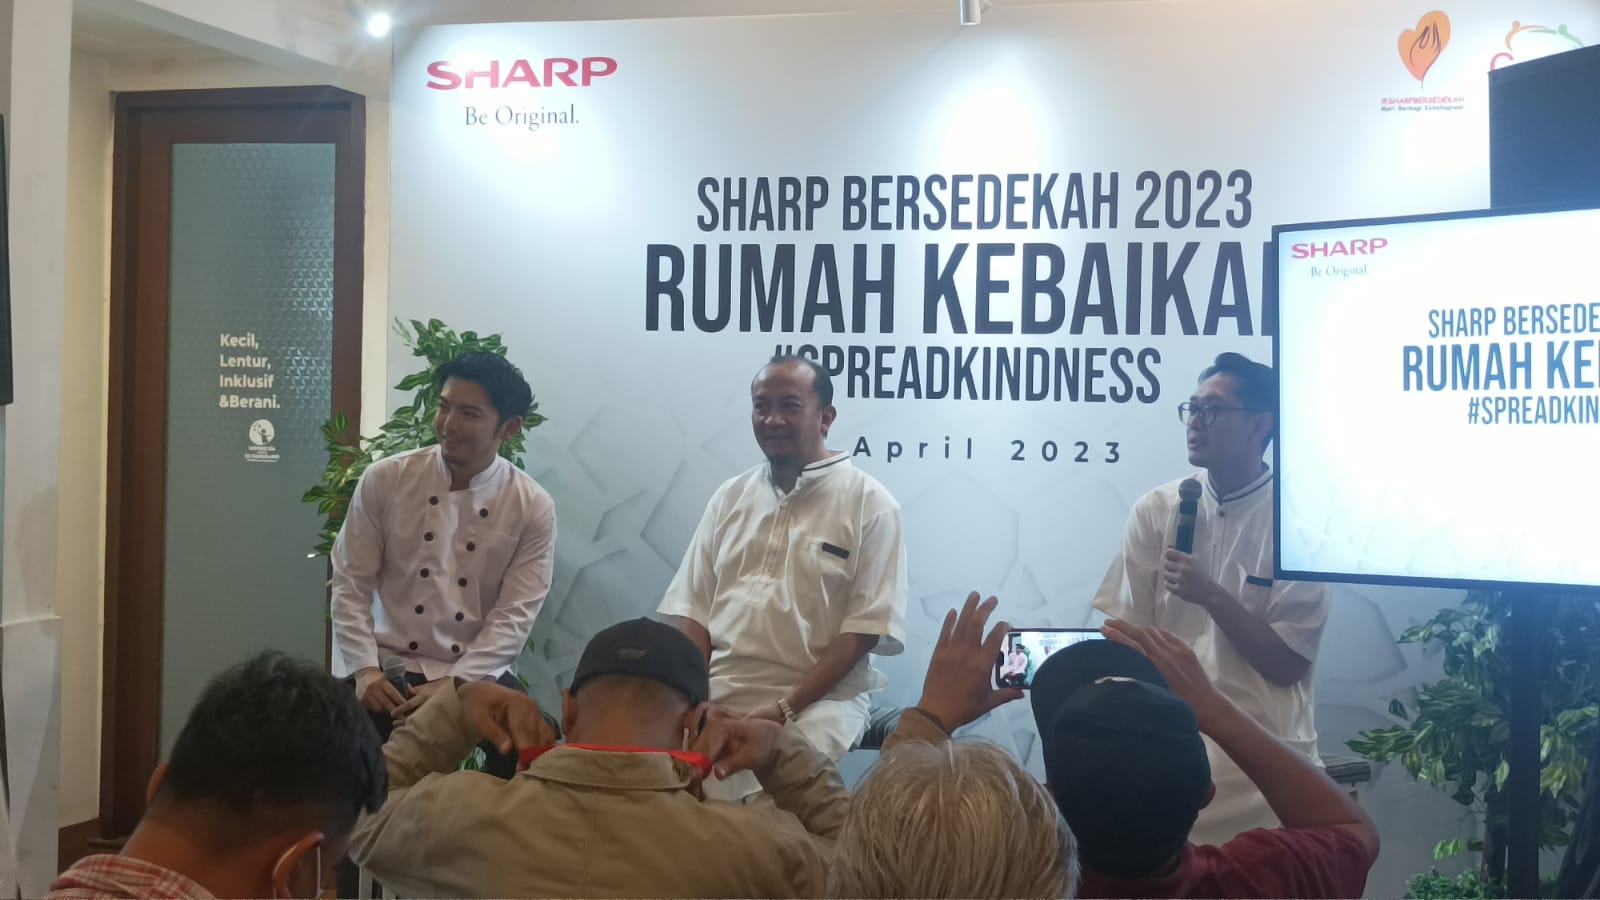 Tebar Kebaikan dan Semangat Berbagi di Bulan Ramadan, Sharp Indonesia Hadirkan Rumah Kebaikan